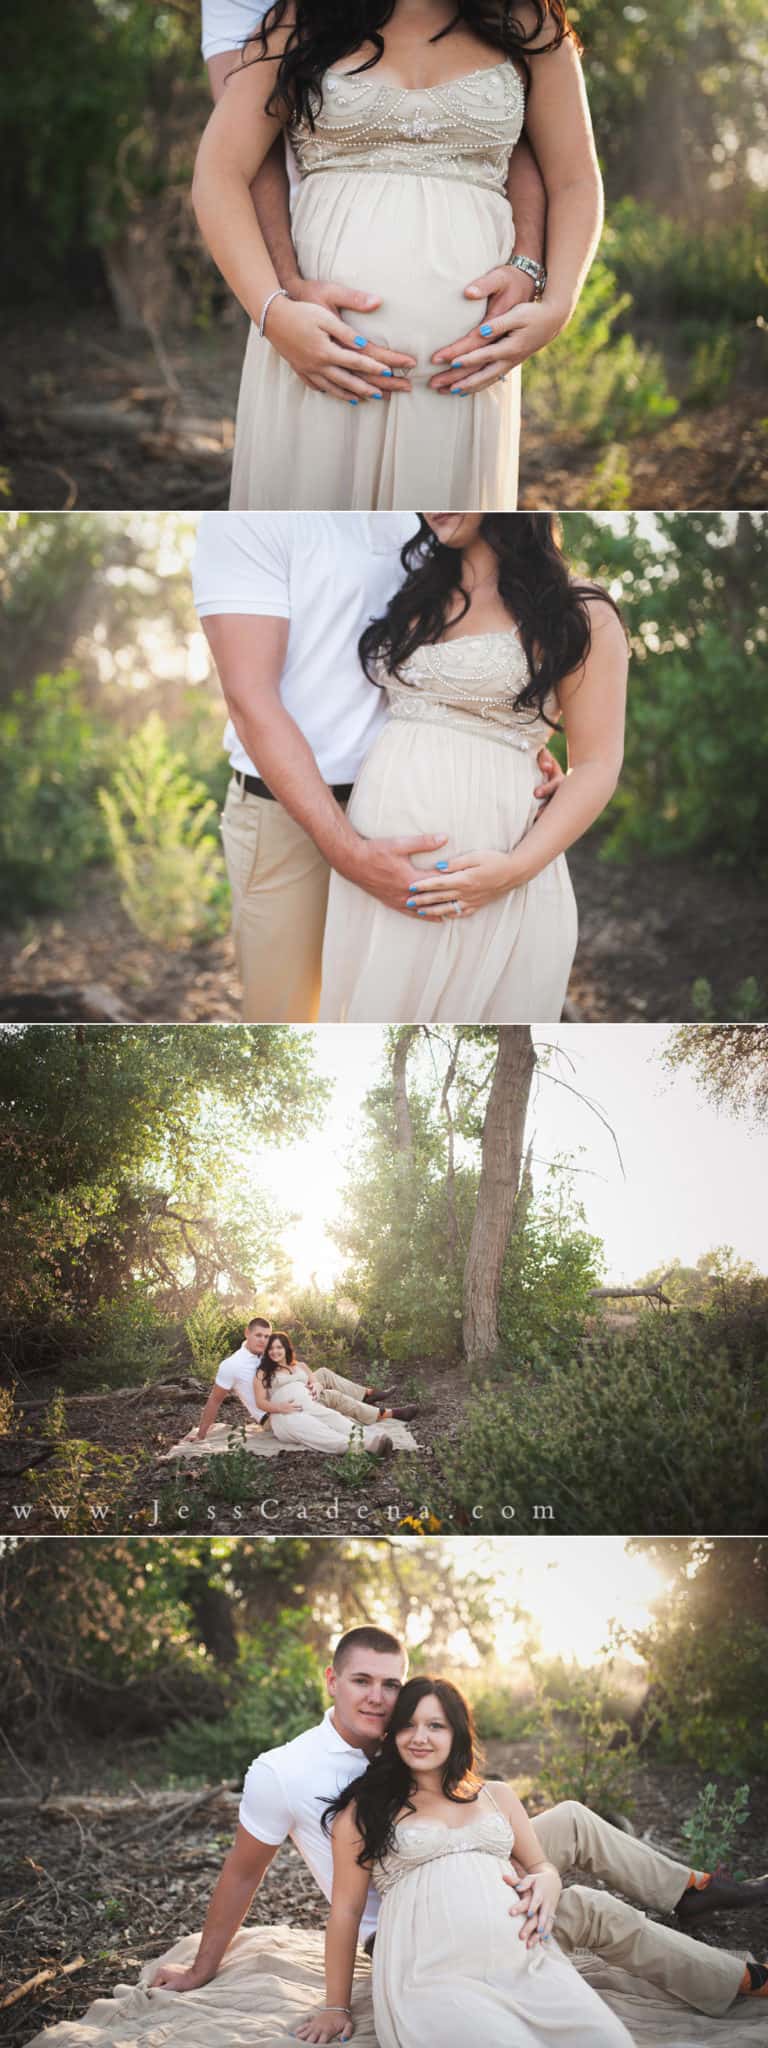 Katie-Bakersfield-Maternity-Photographer-2